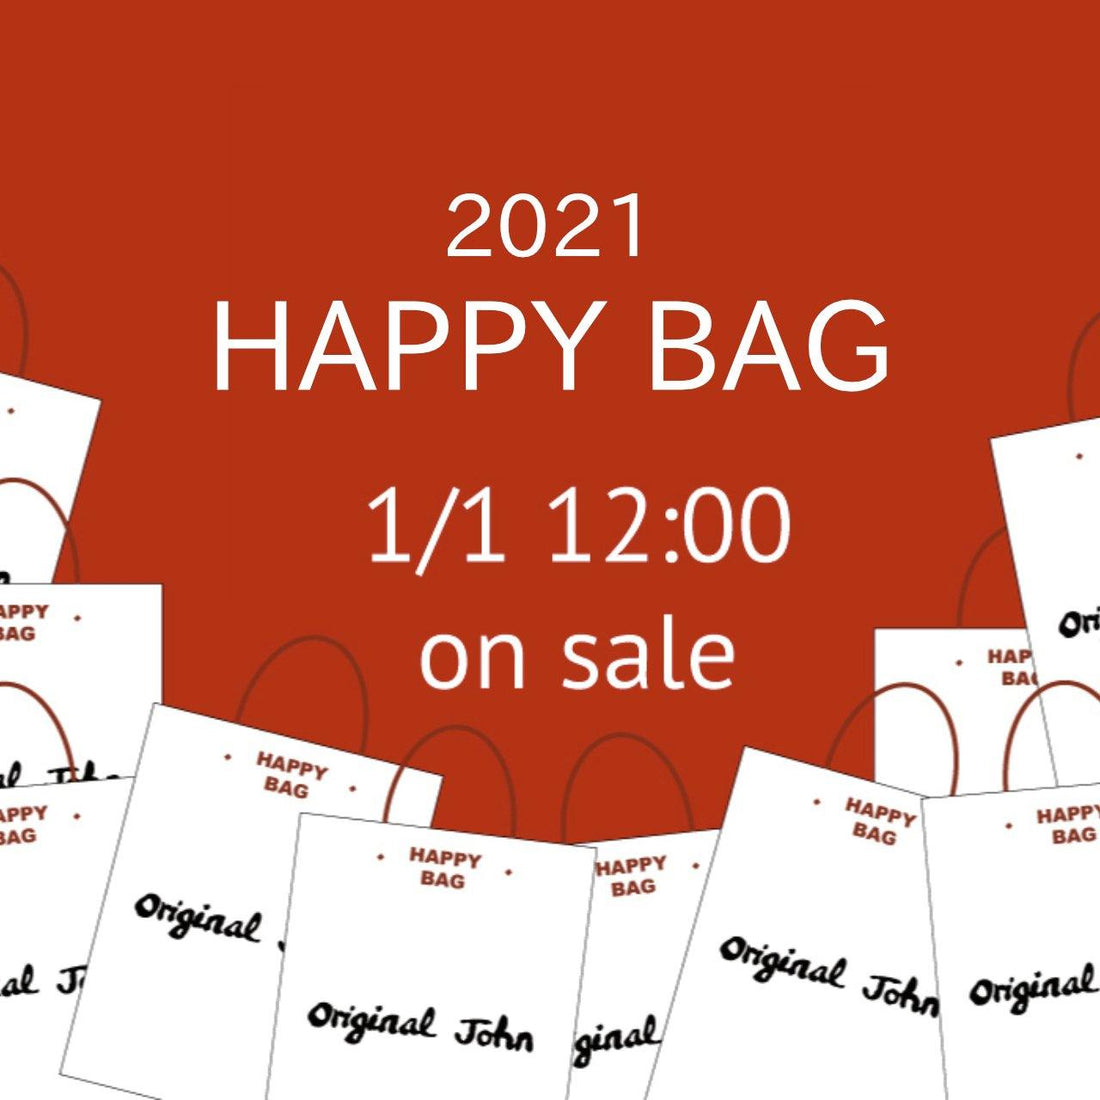 Original John “Happy Bag 2021” - Sopwith camel ONLINE